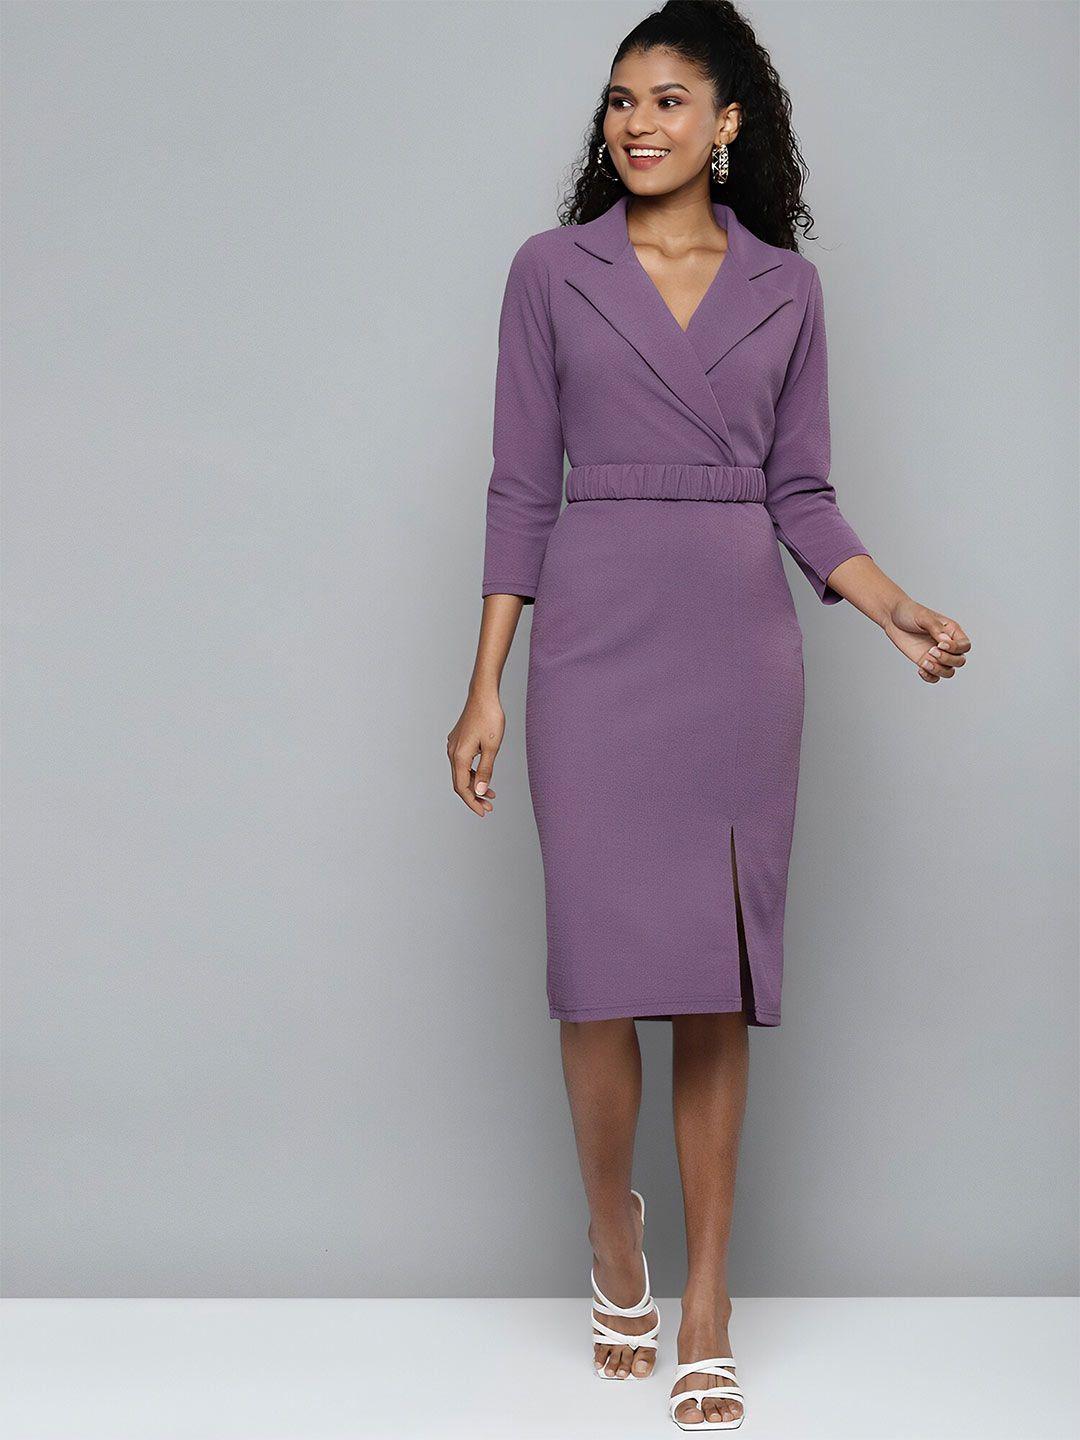 margi-designers-lavender-dress